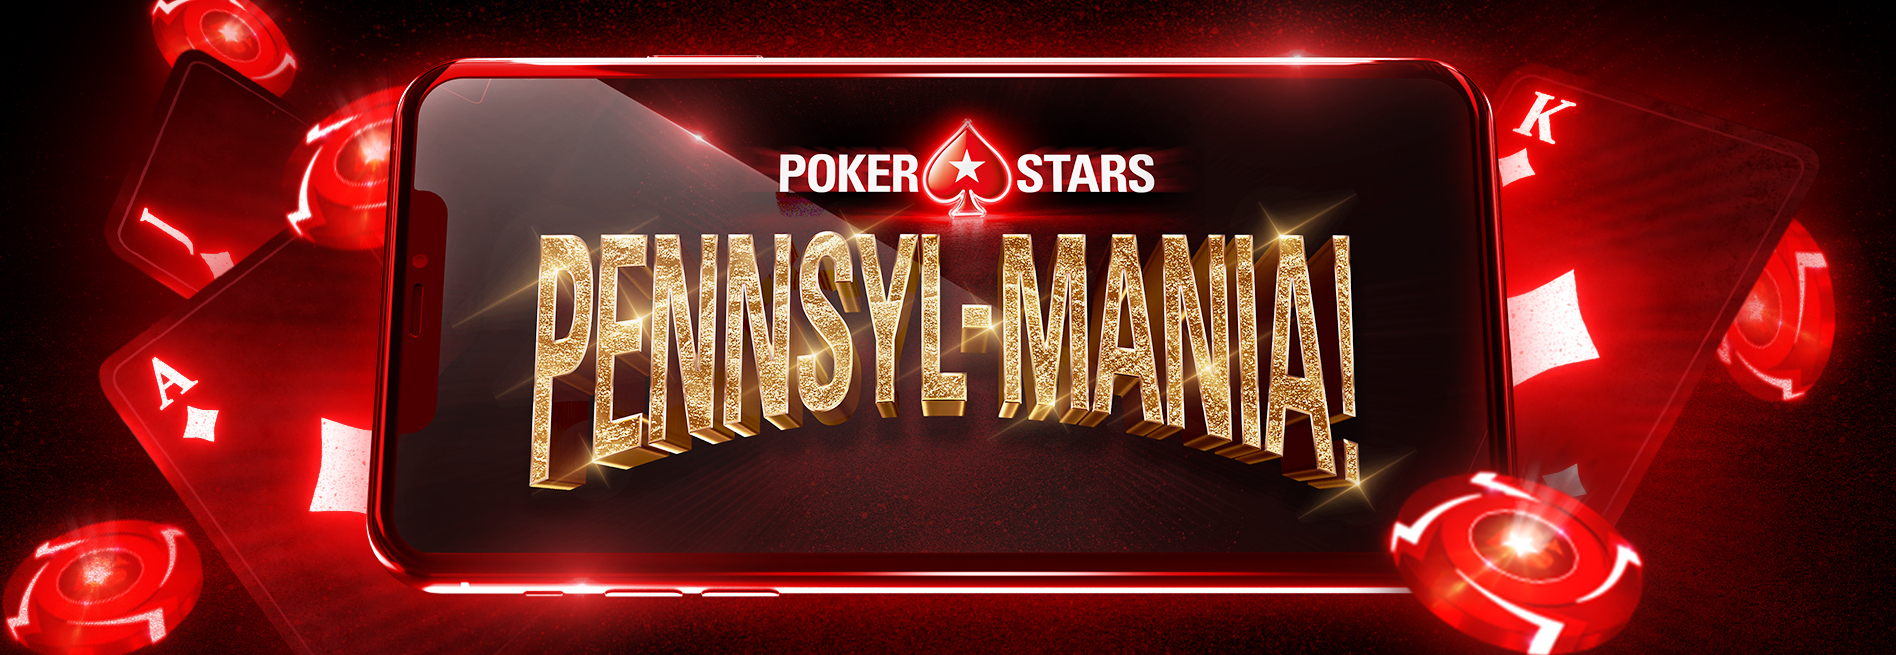 Pennsyl-MANIA kembali ke PokerStars PA sebagai Turnamen Poker Online Pennsylvania Terbesar yang Pernah Ada dengan $ 350K Dijamin